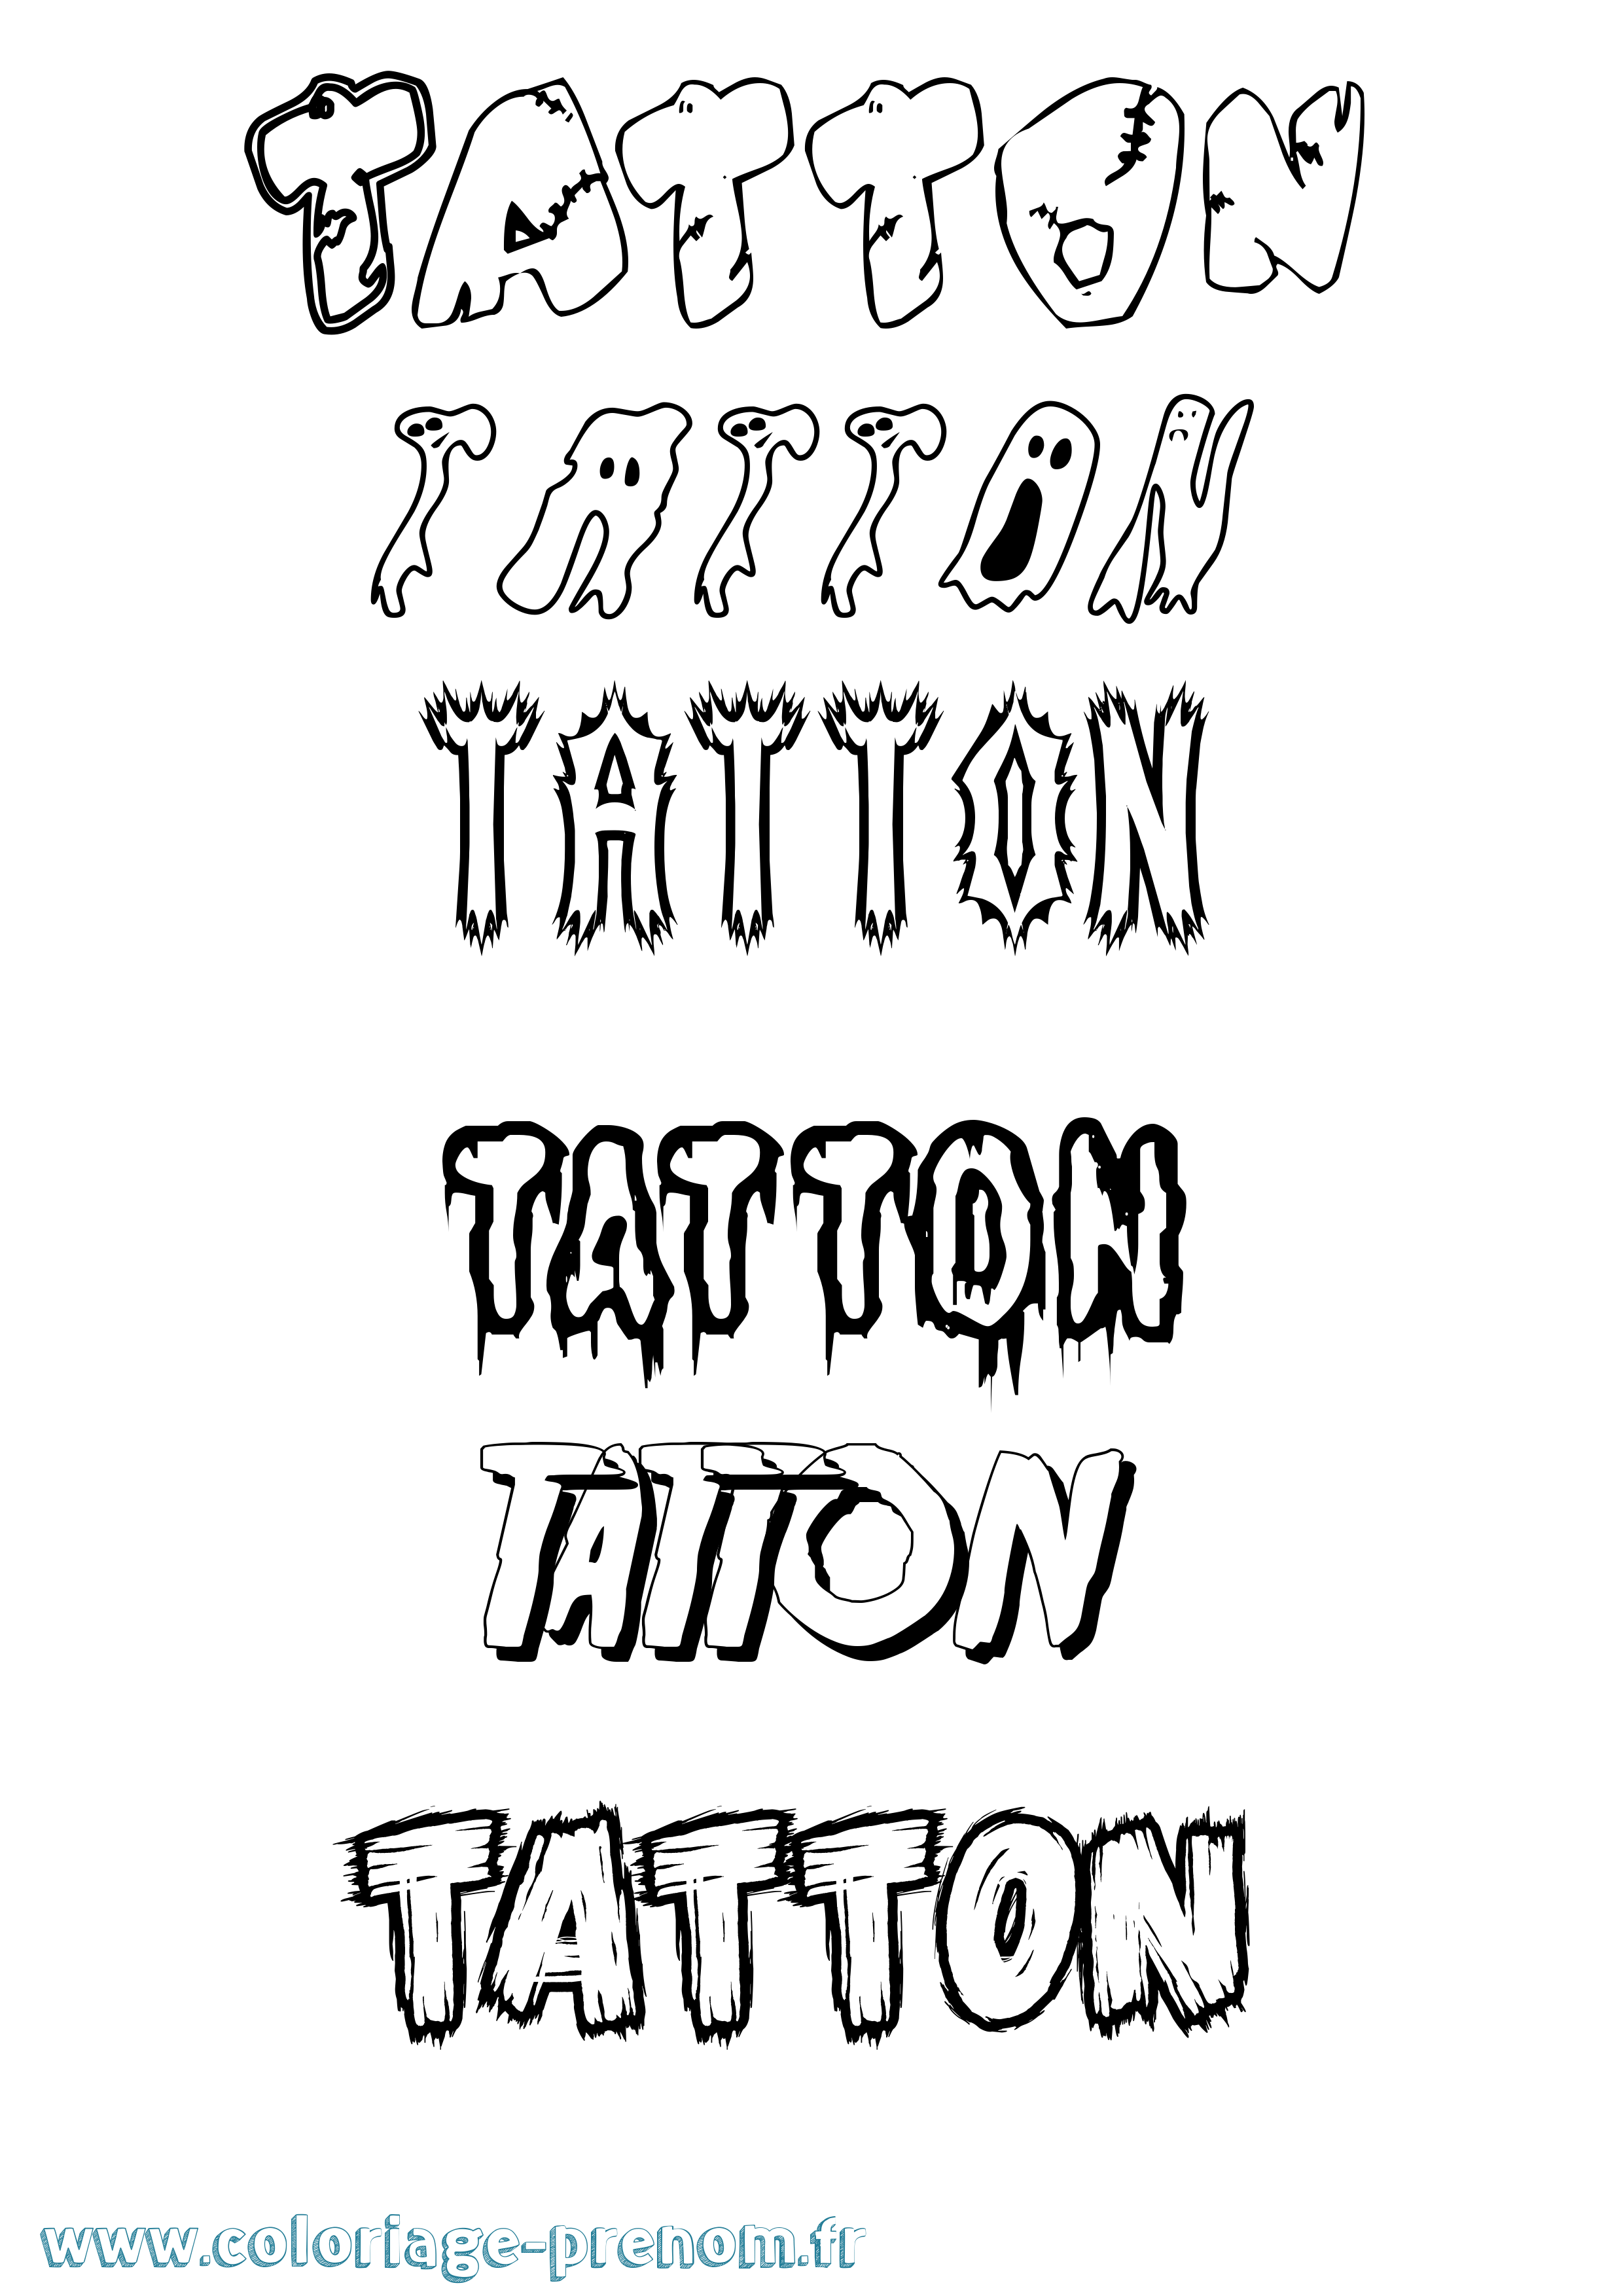 Coloriage prénom Tatton Frisson